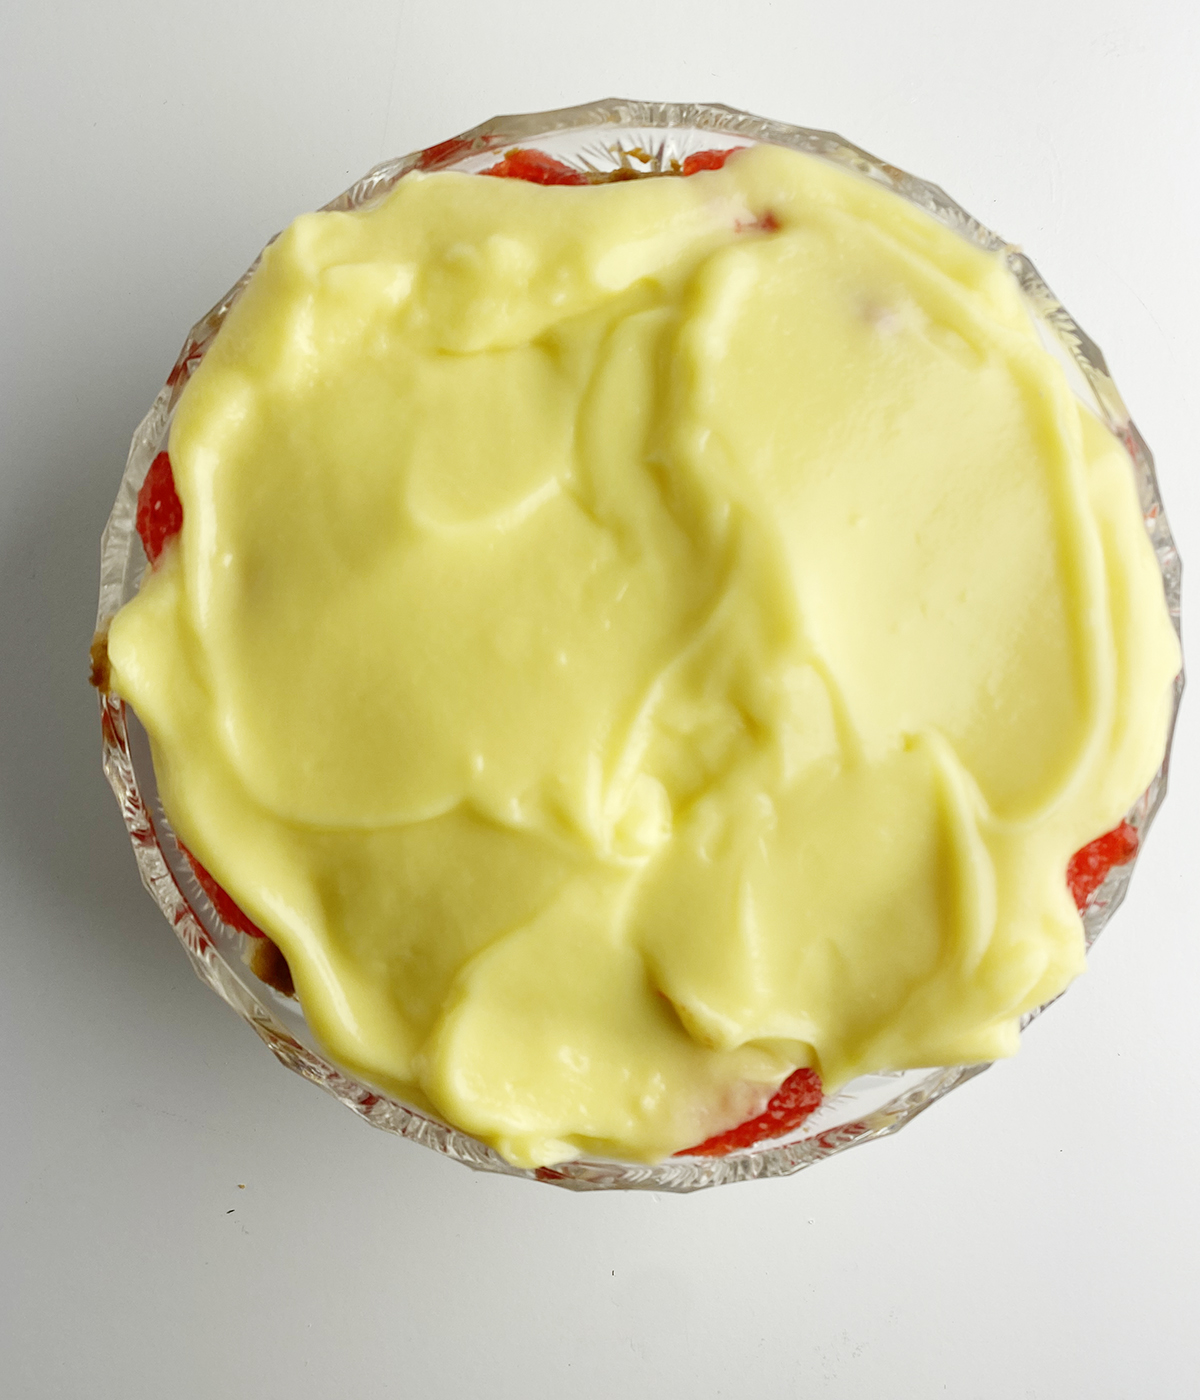 Vanilla pudding layer of an Irish trifle.